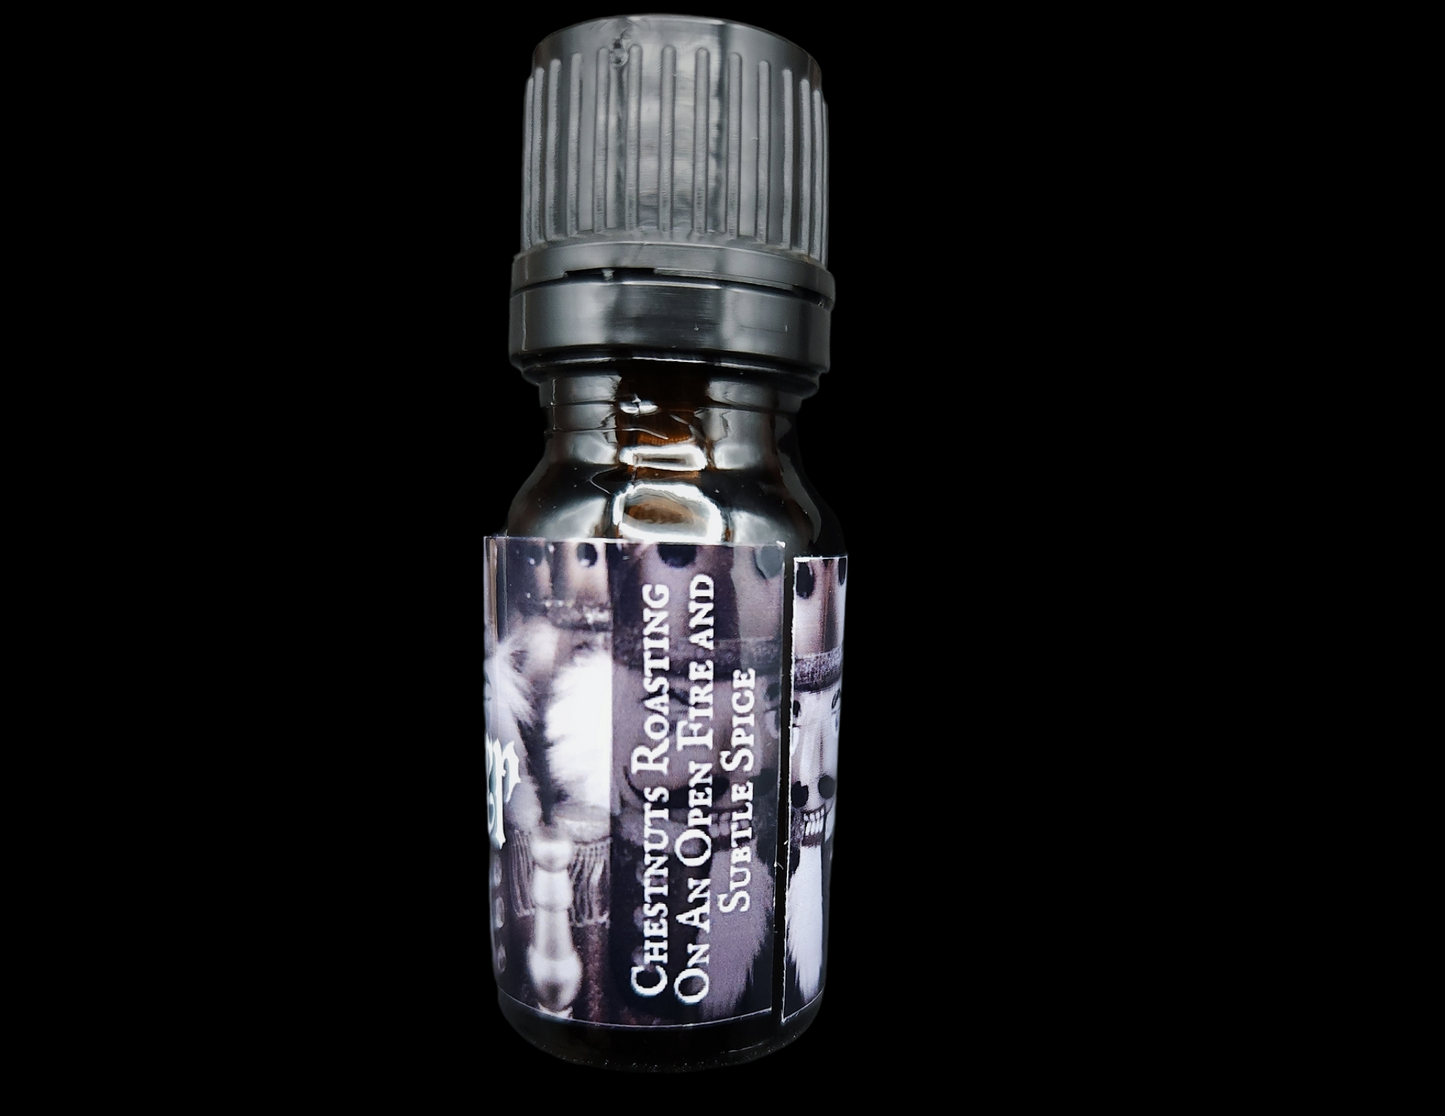 Nutcracker Perfume Oil